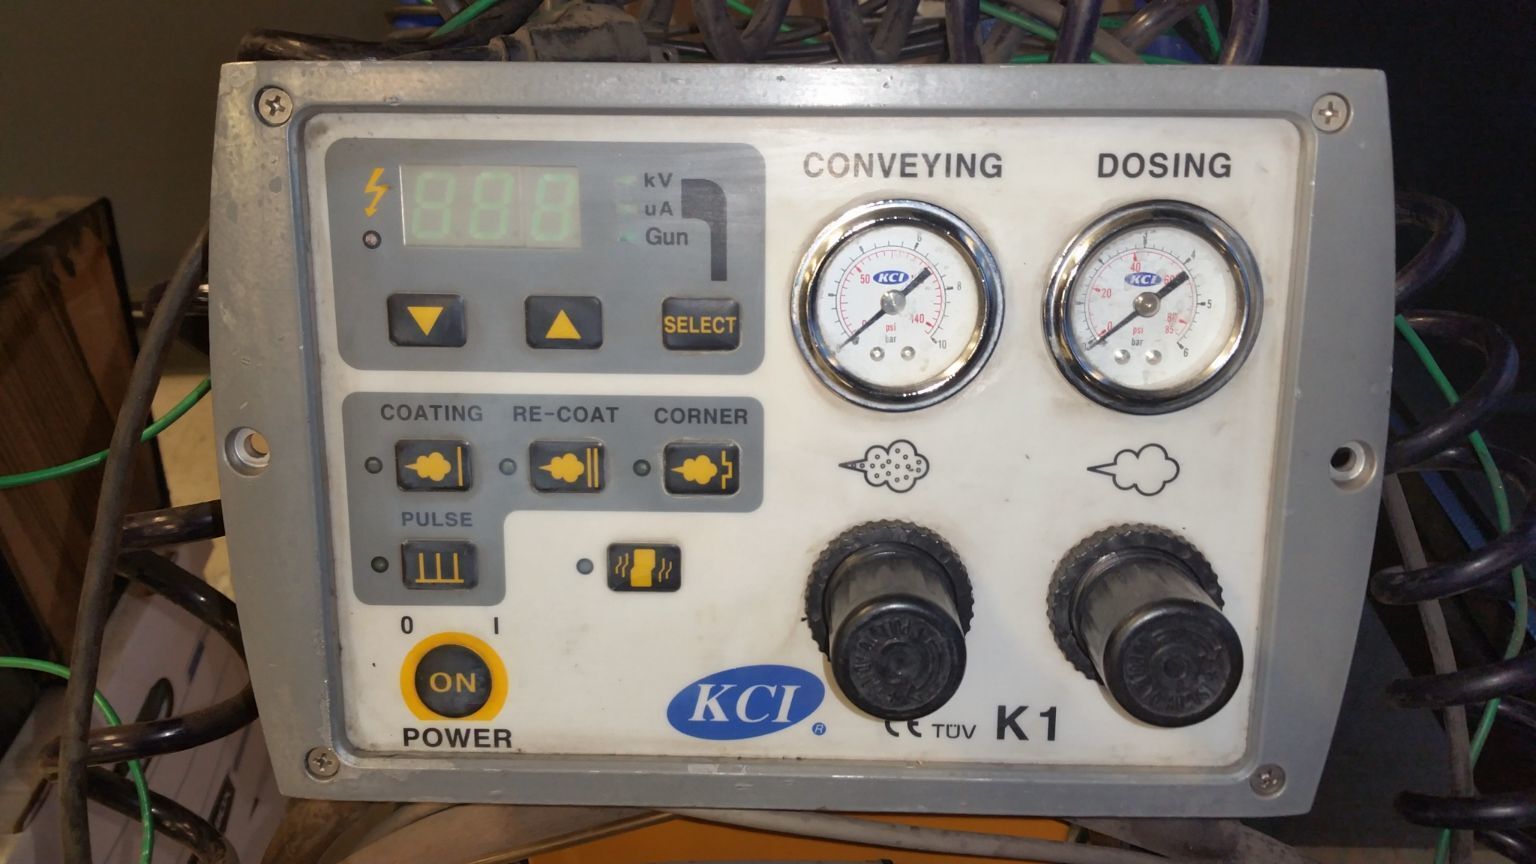 KORYO COATING MACHINE INDUSTRIAL CO. LTD K1 SERIES Powder Coating | MD Equipment Services LLC